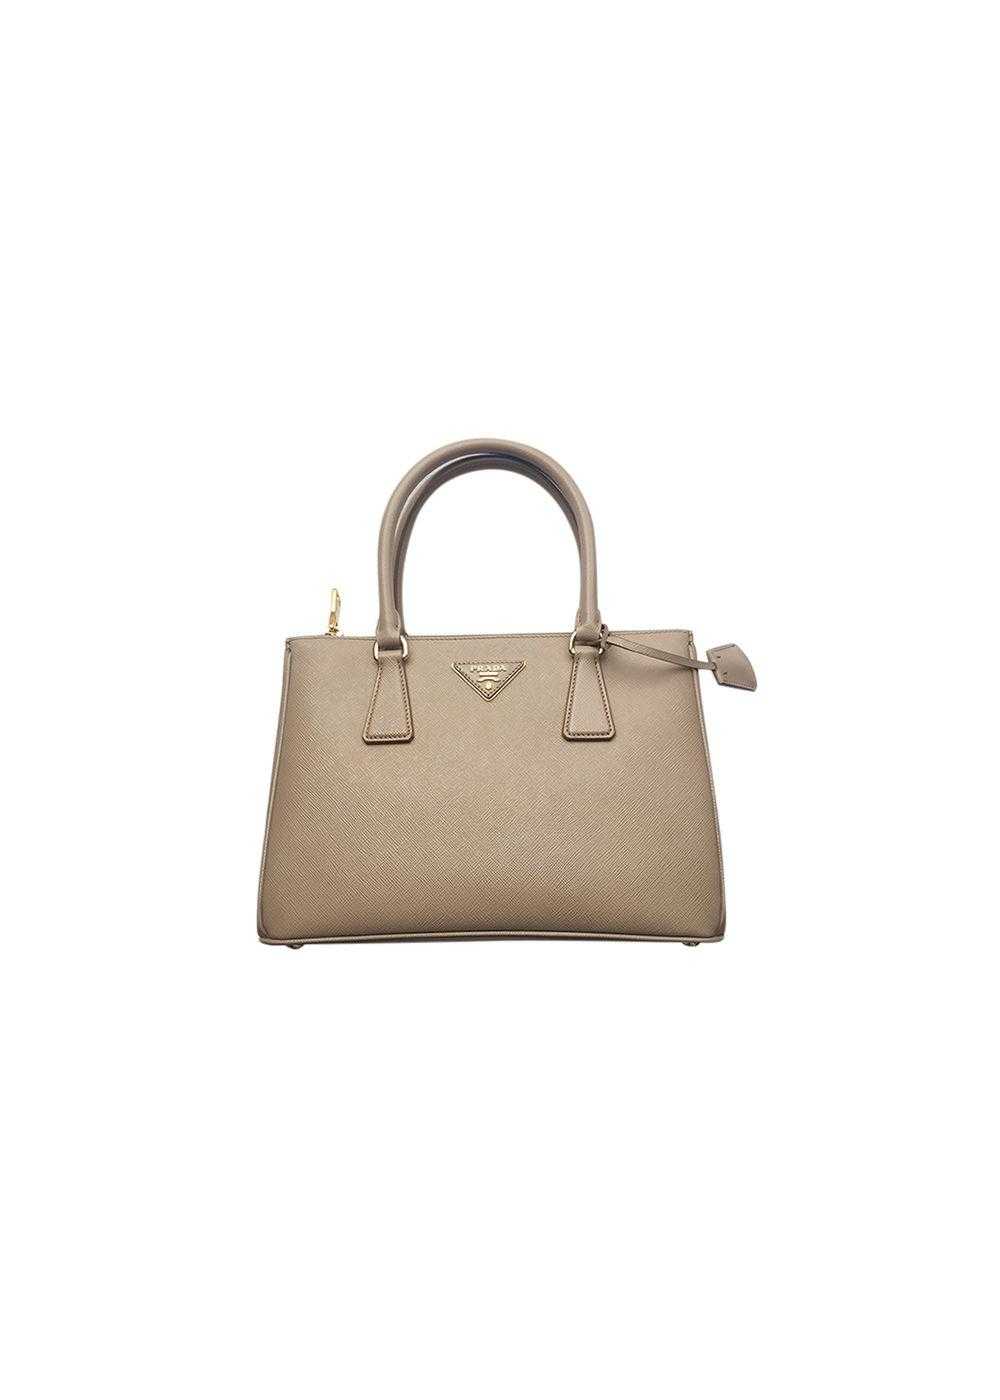 Prada Beige Saffiano leather small Galleria bag - image 1